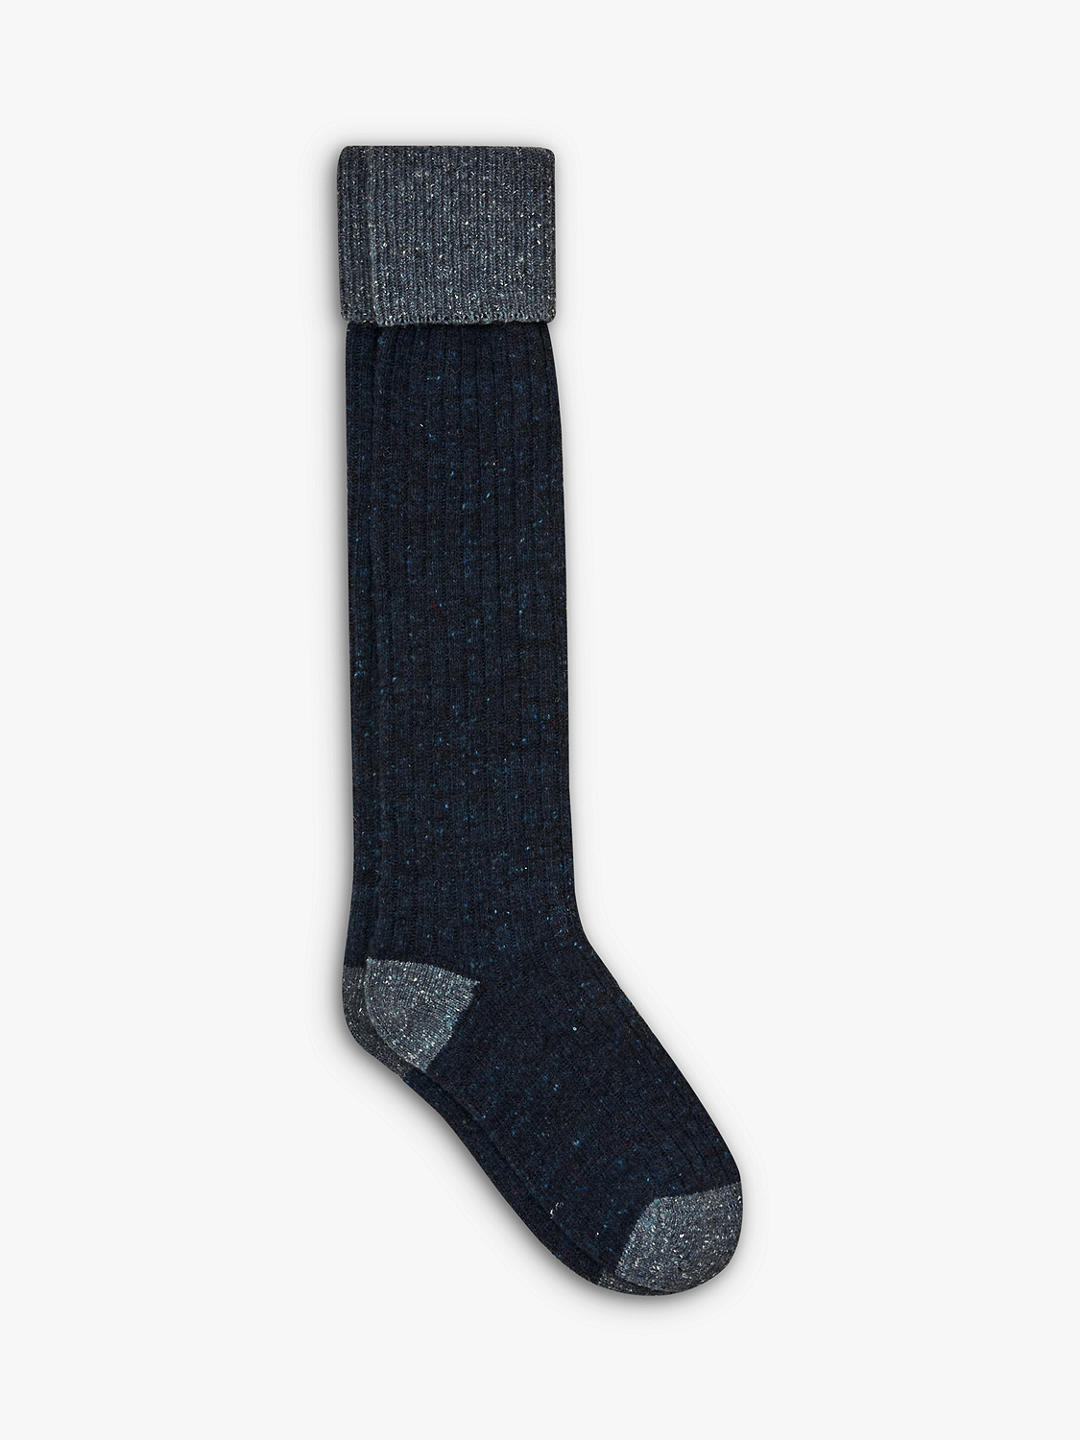 Celtic & Co. Donegal Wool Blend Boot Cashmere Blend Socks, Navy